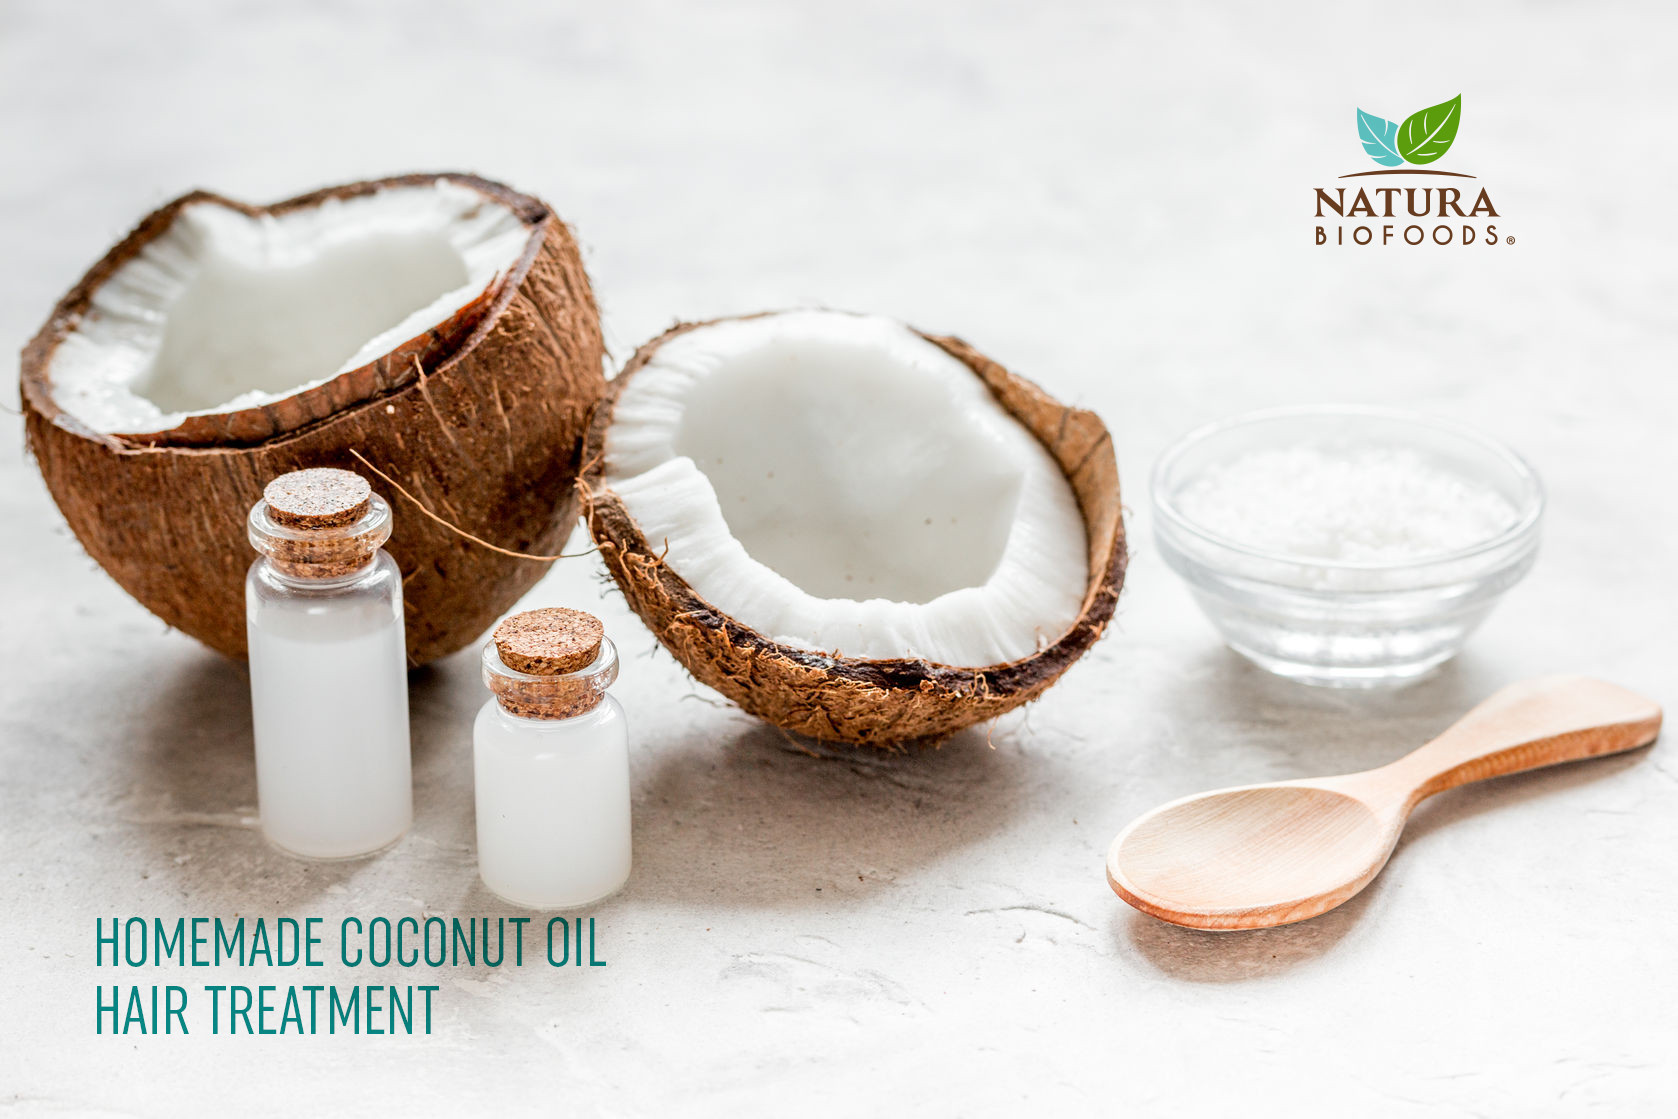 Best ideas about Coconut Oil Hair Treatment DIY
. Save or Pin Tratamiento Casero para Cabello de Aceite de Coco Natura Now.